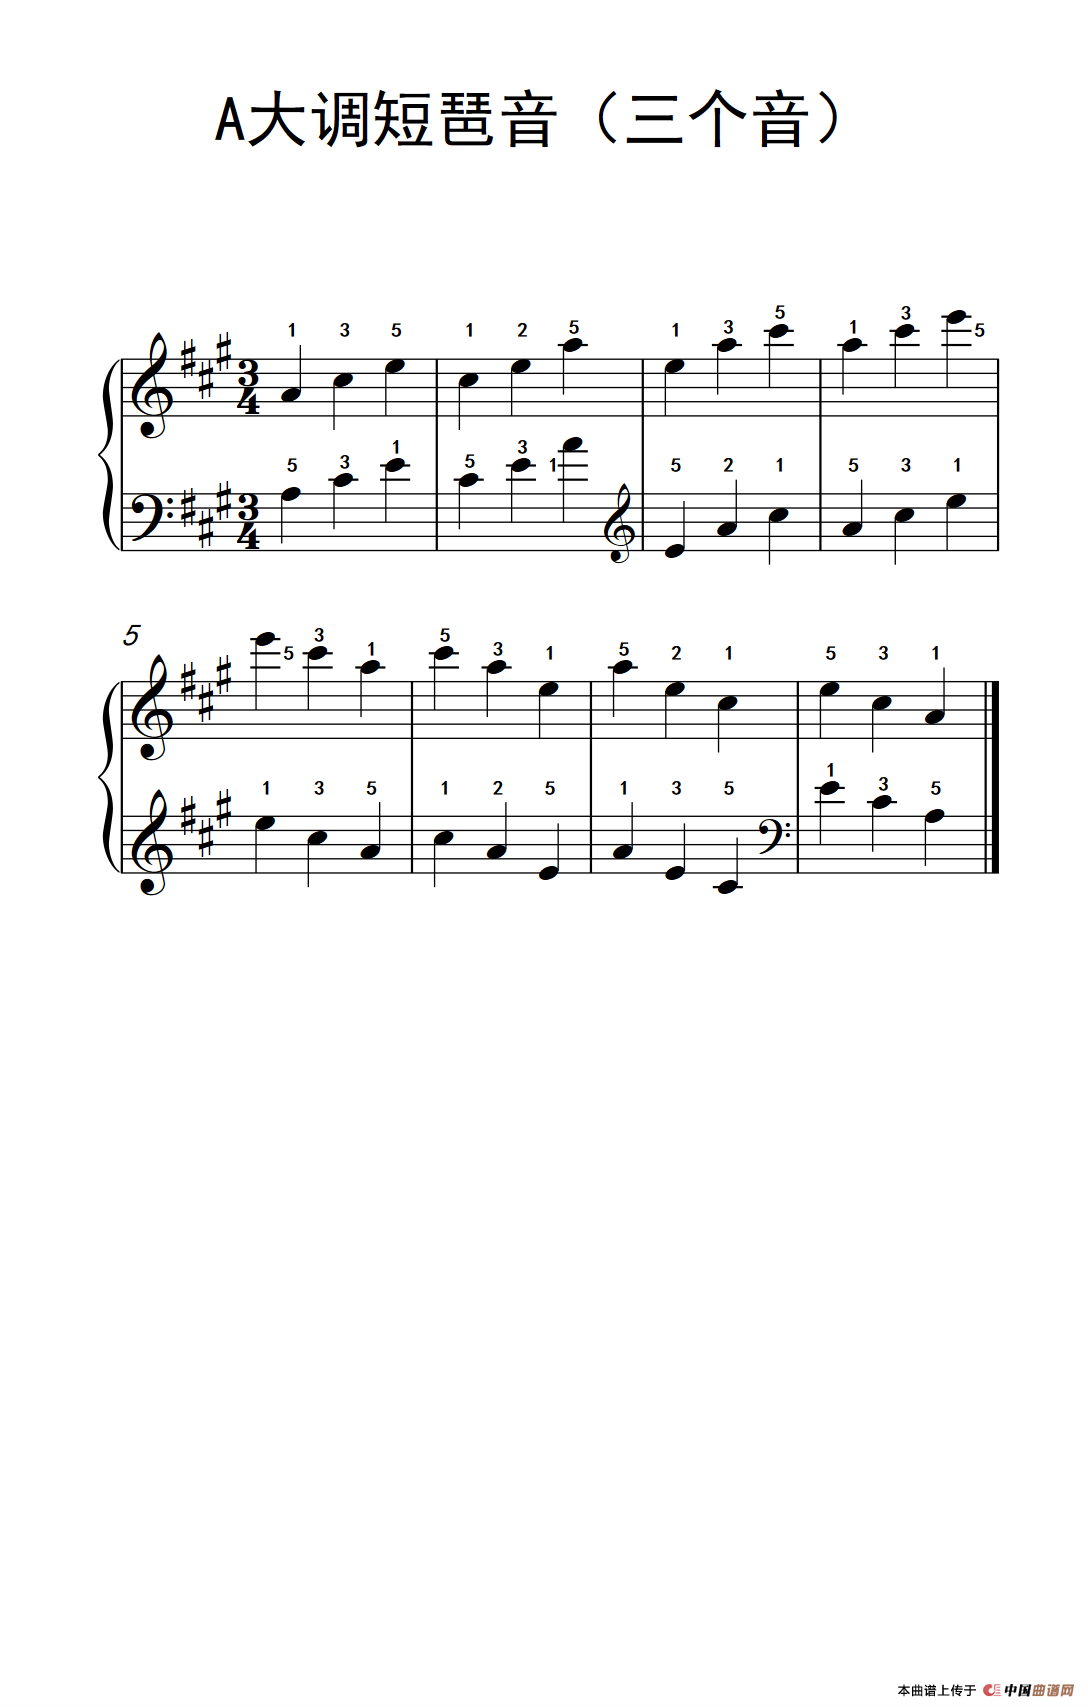 《A大调短琶音》钢琴曲谱图分享